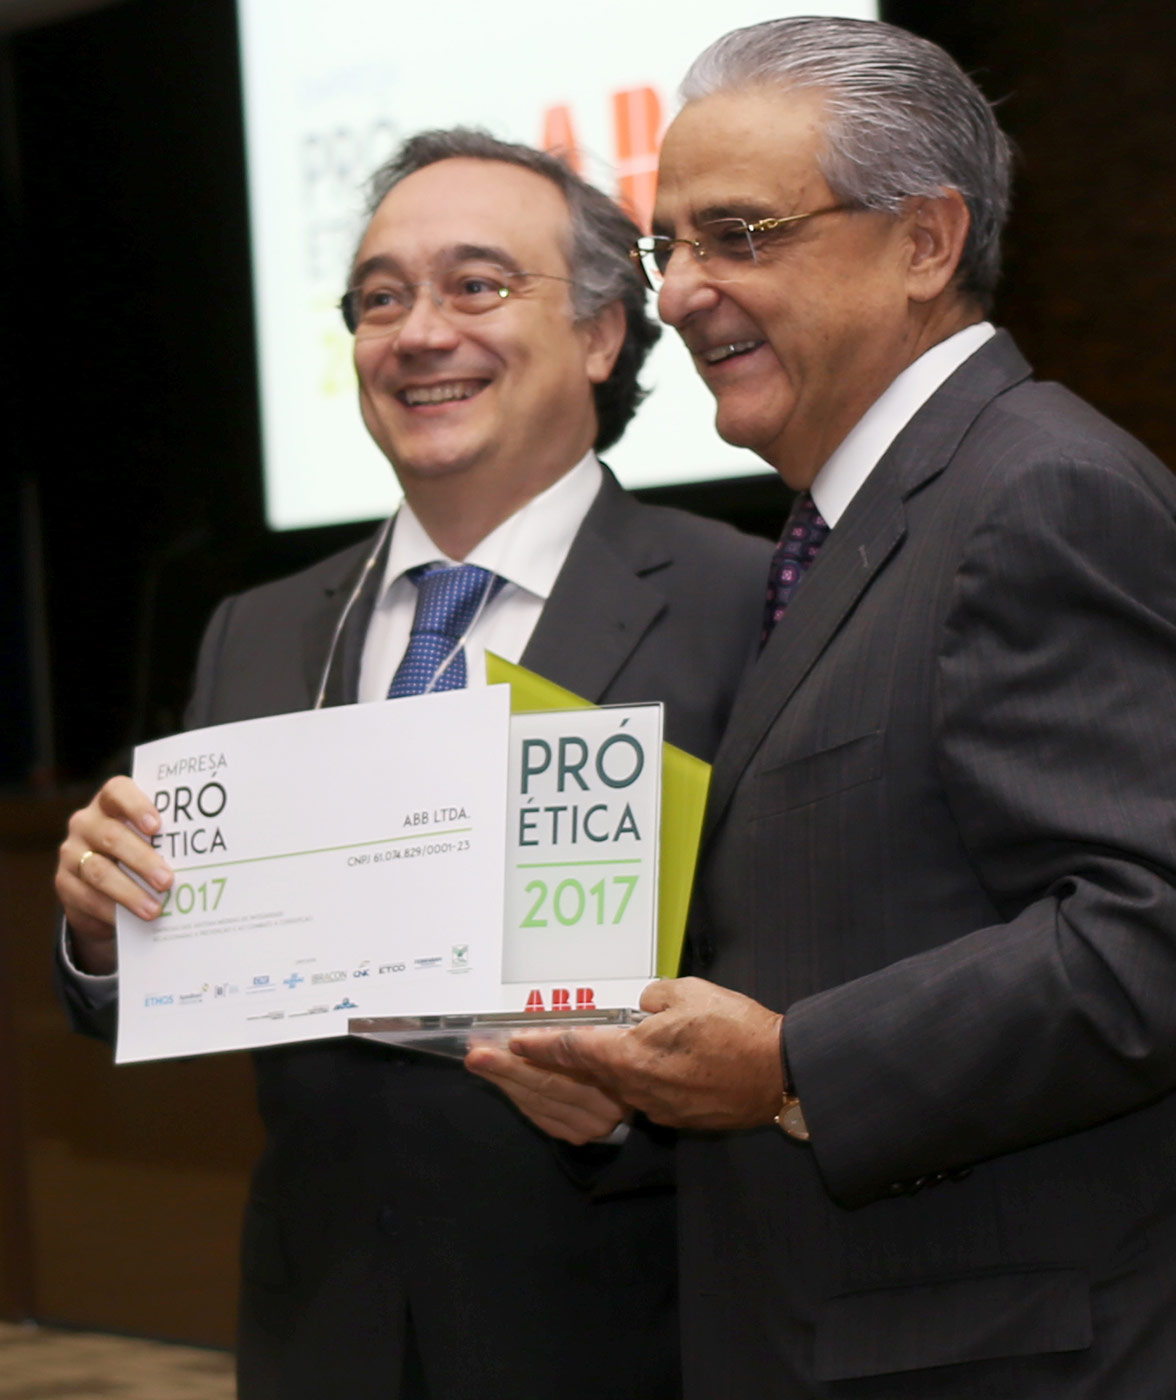 Pro etica award (photo)